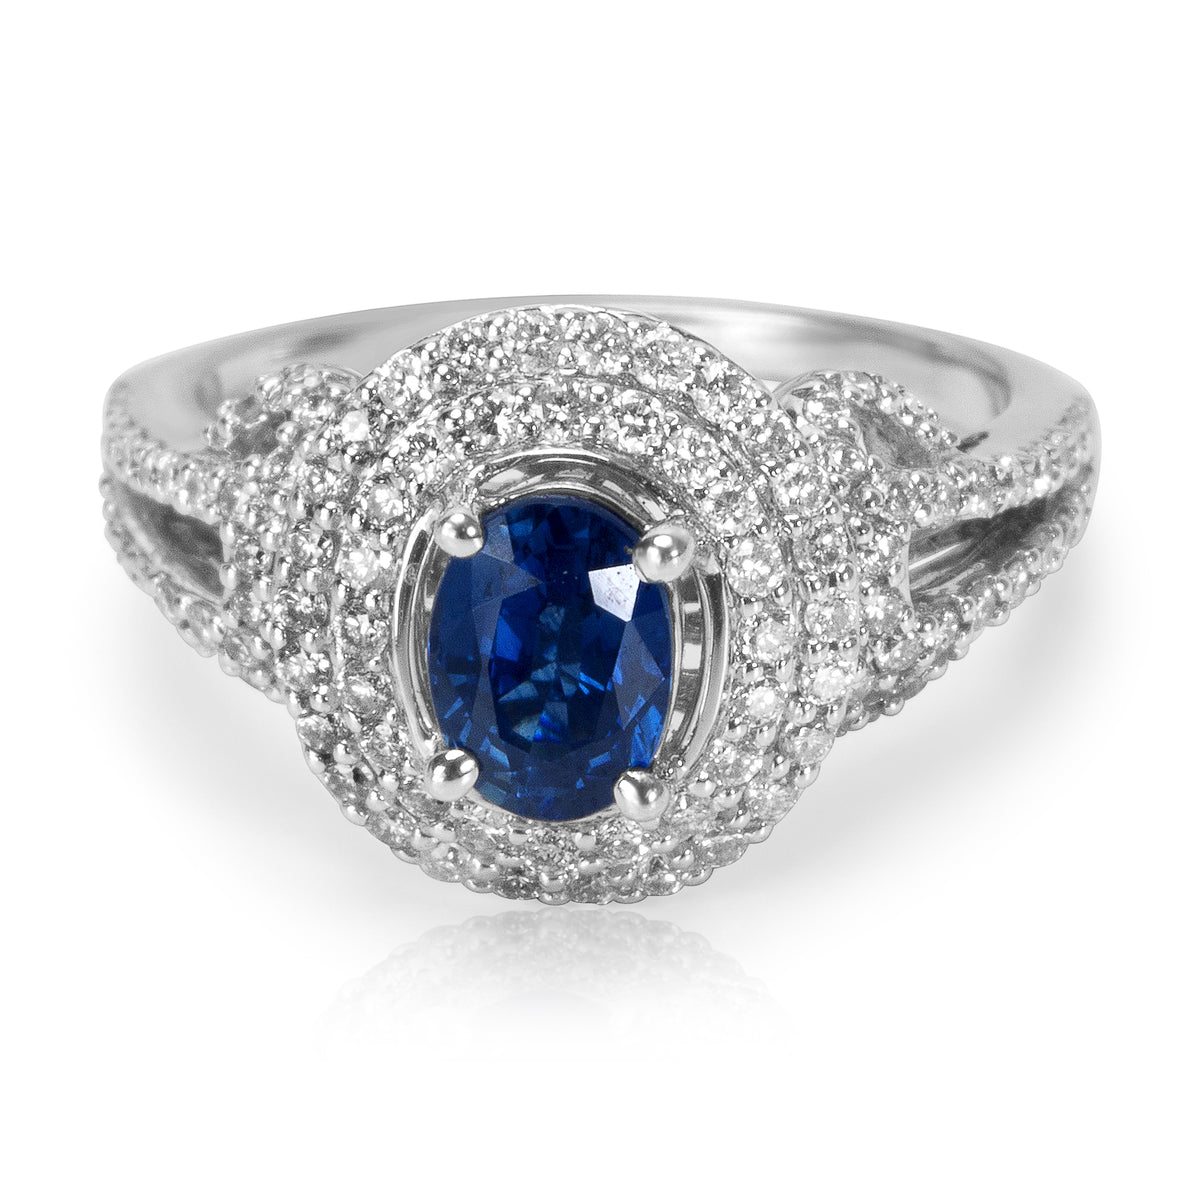 BRAND NEW Diamond & Sapphire Double Halo Fashion Ring in 14k WG (0.65 CTW)